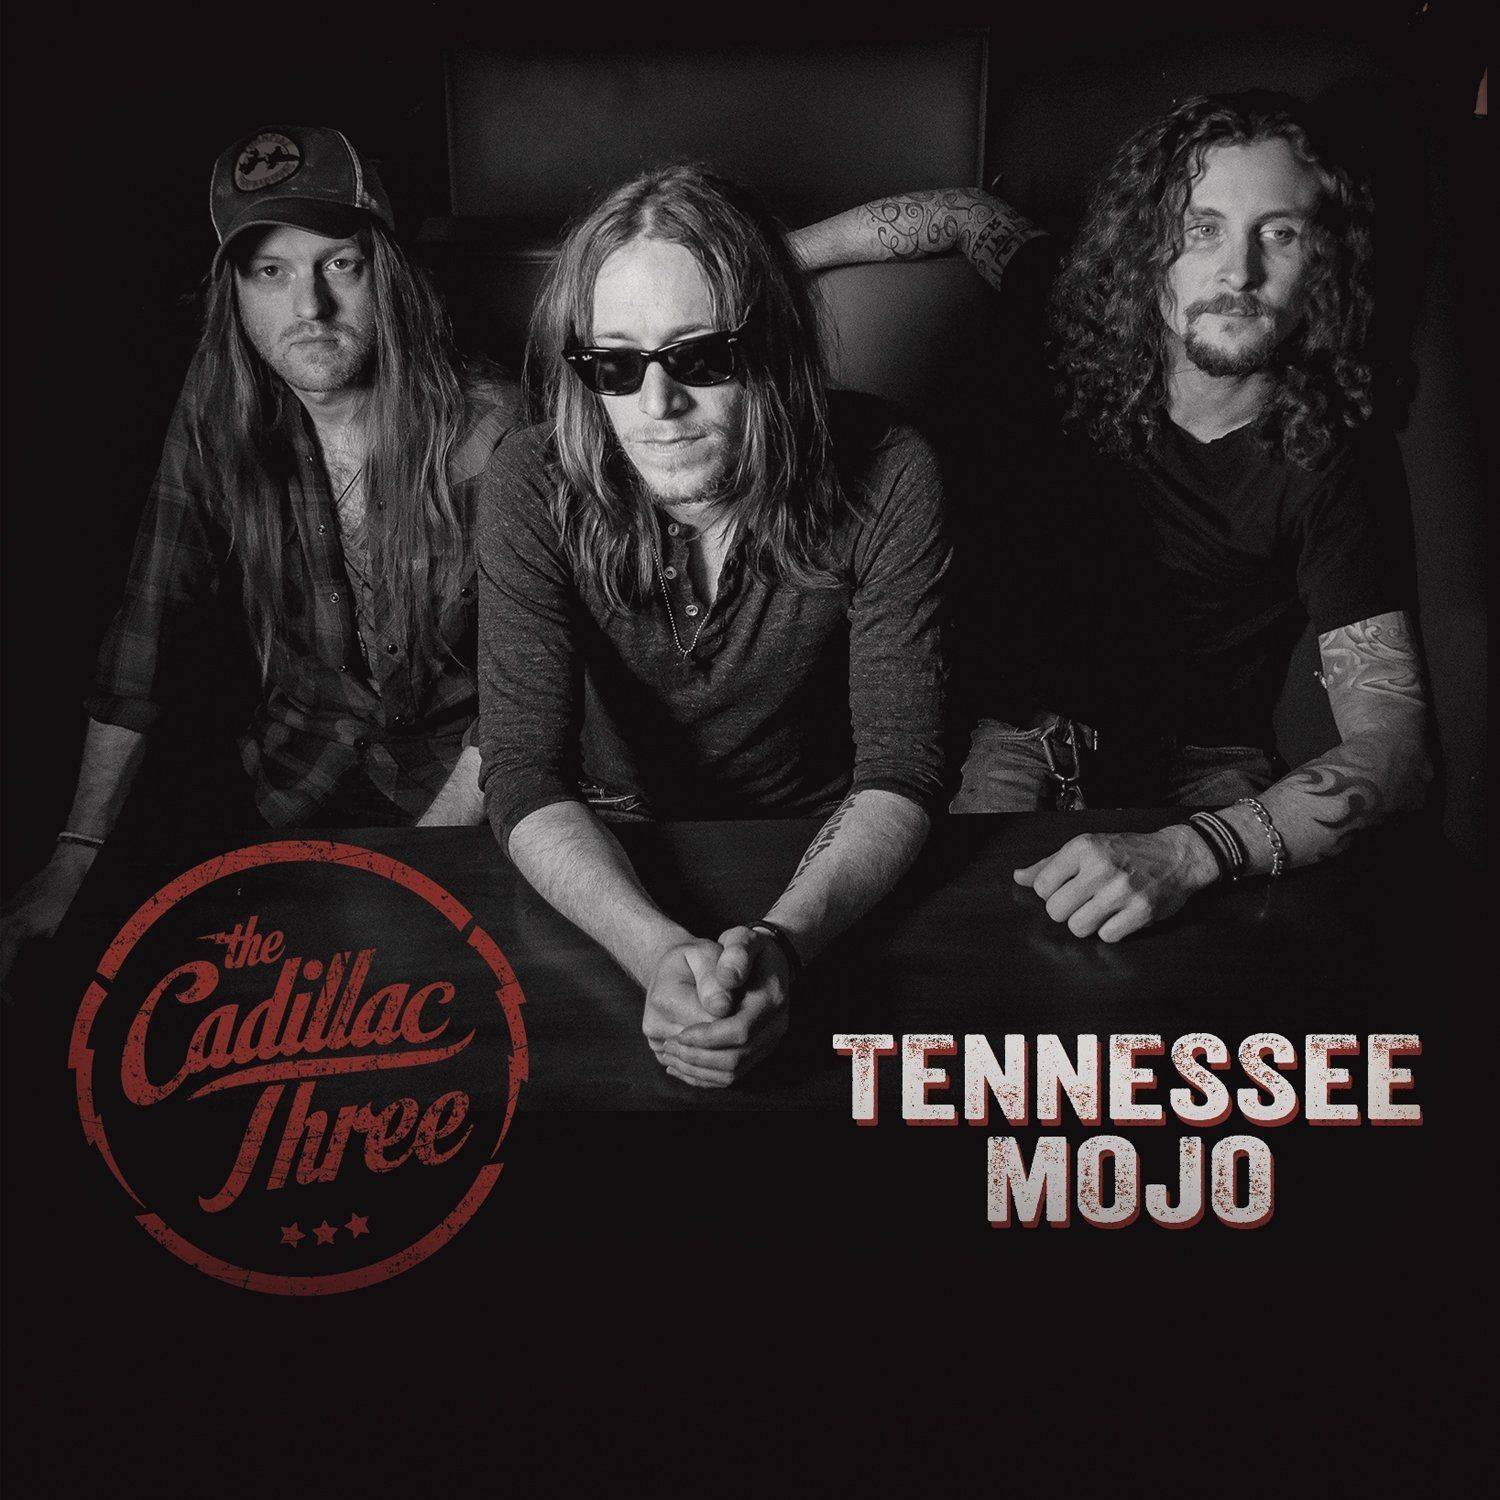 Tennessee Mojo